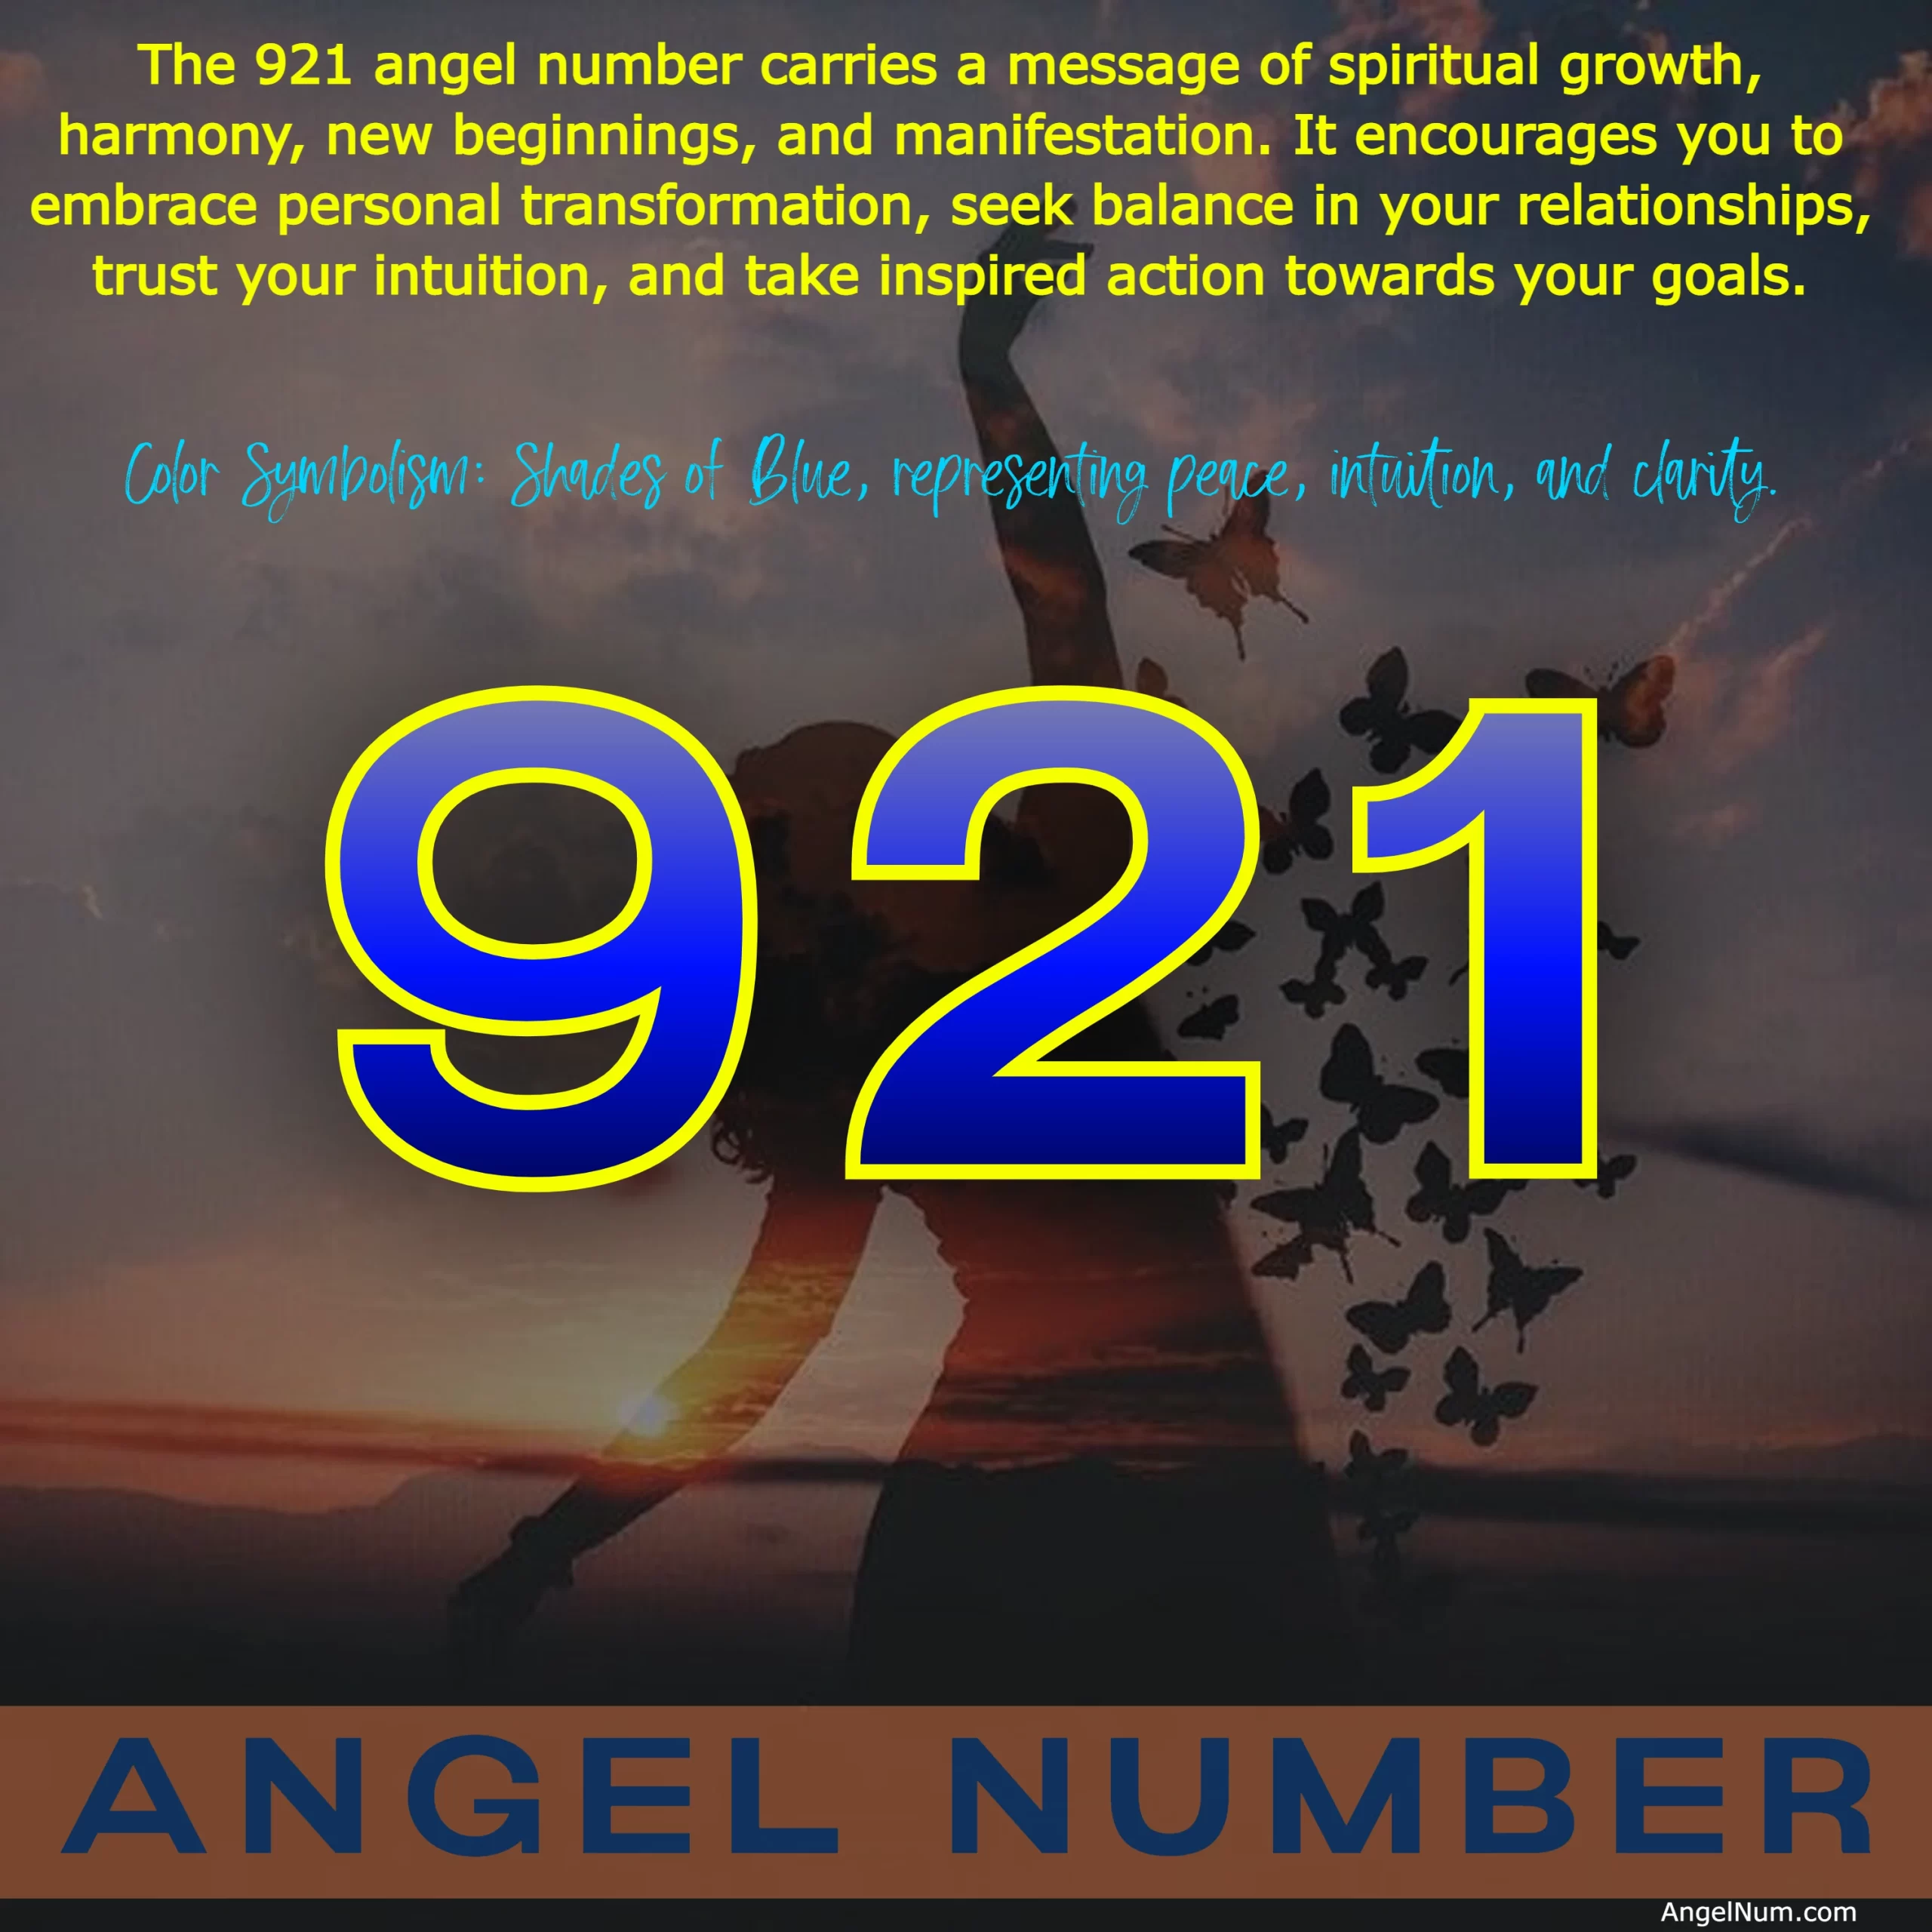 Angel Number 921: Spiritual Growth, Harmony, and New Beginnings